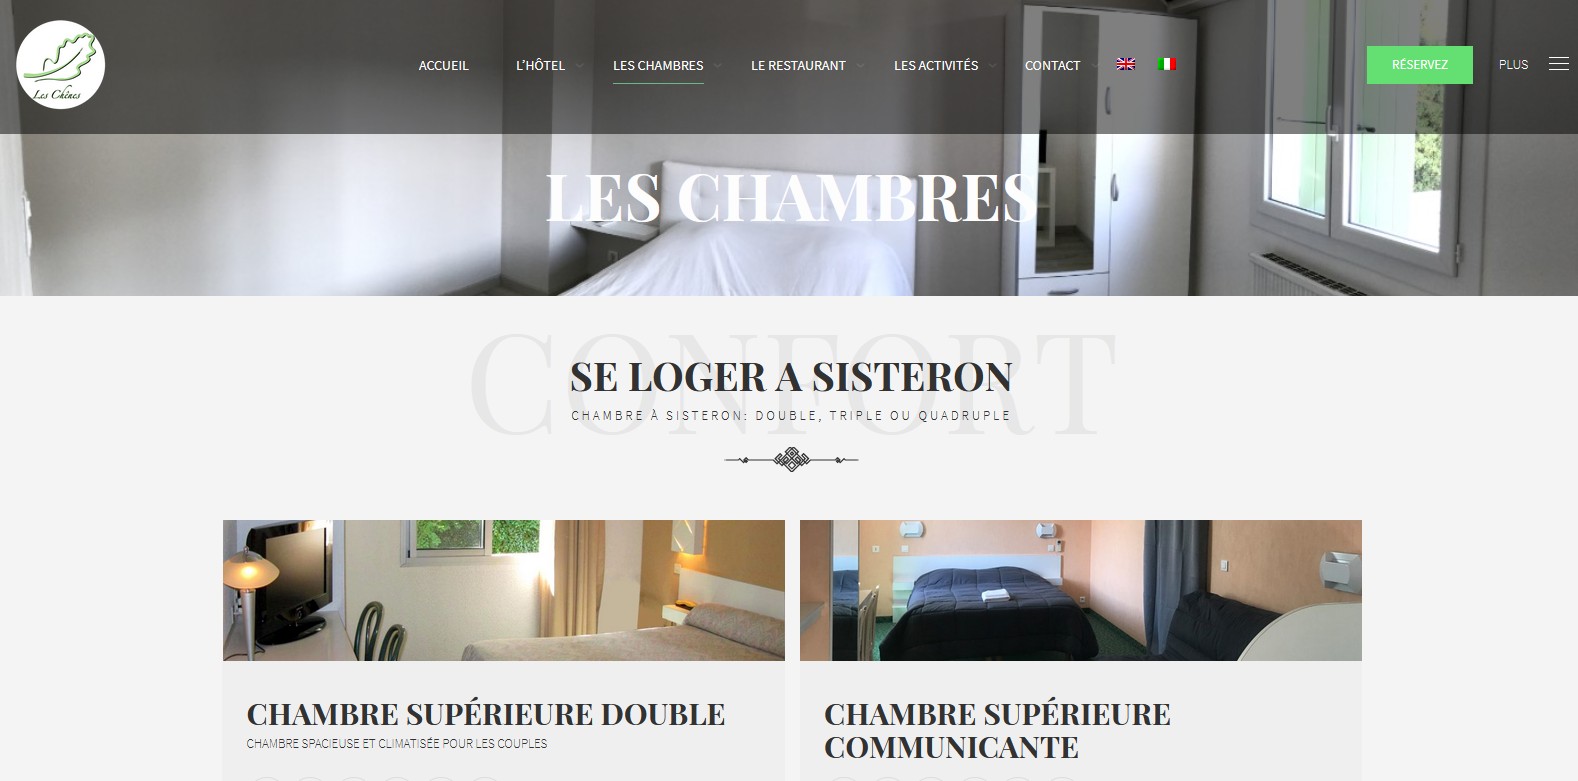 www.hotel-les-chenes.com